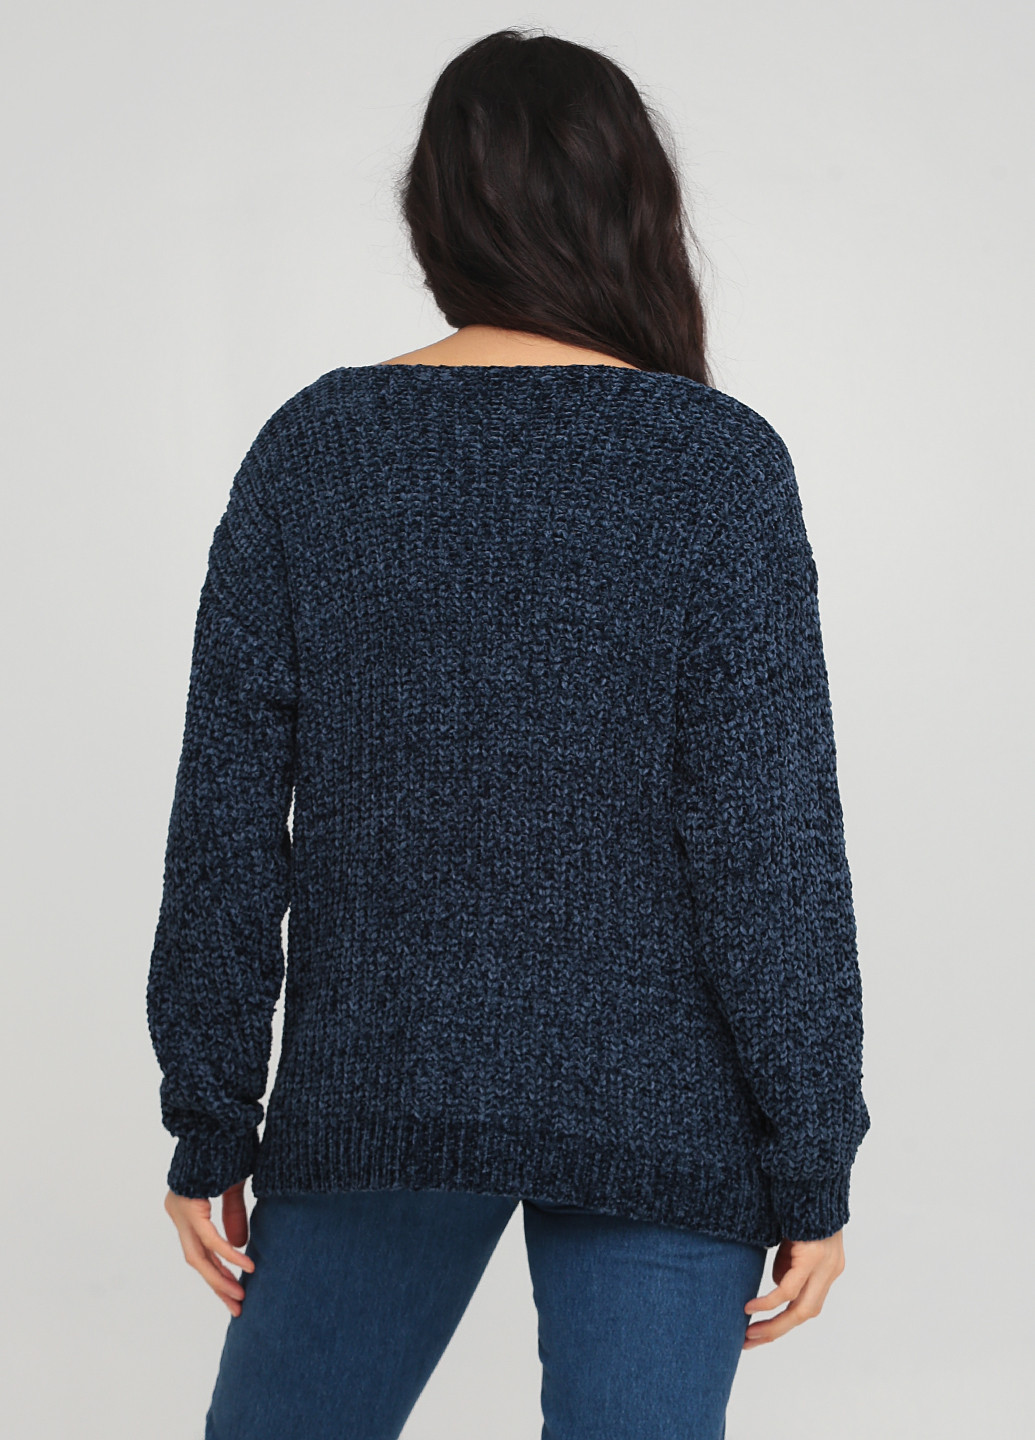 Темно-синий демисезонный пуловер пуловер Rossee